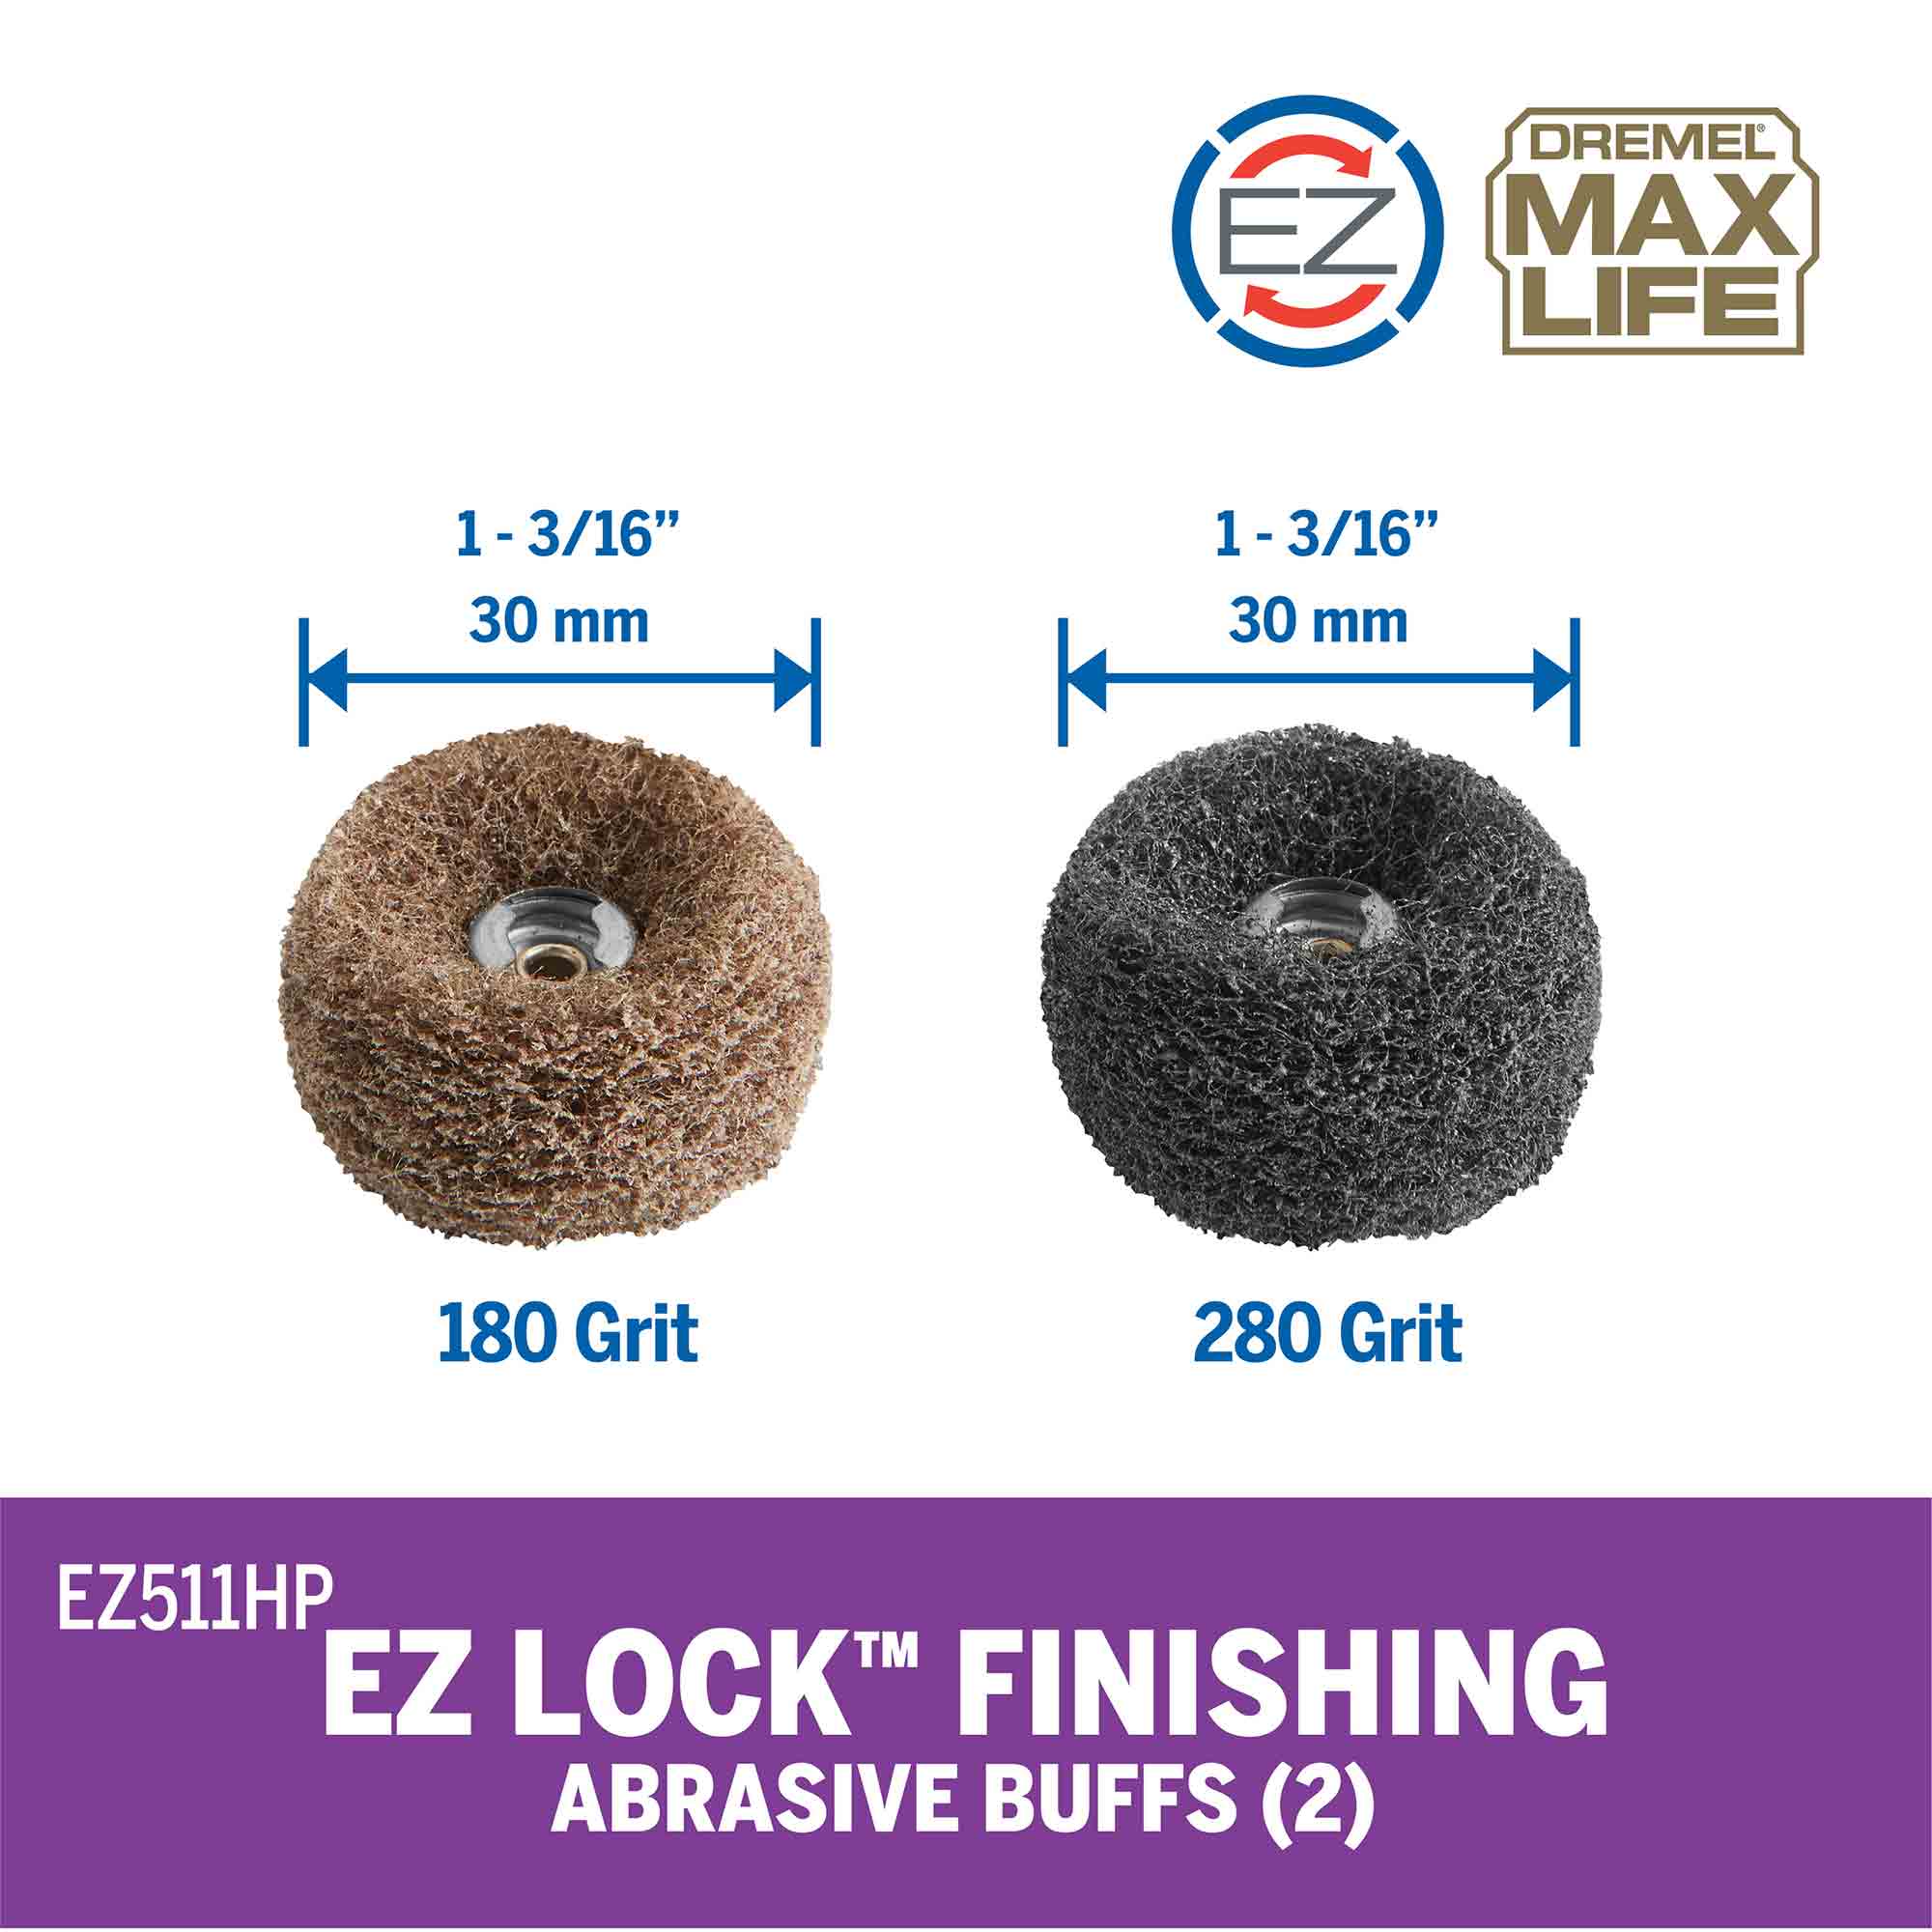 Dremel EZ511HP 180 & 280 Grit Finishing Abrasive Buff